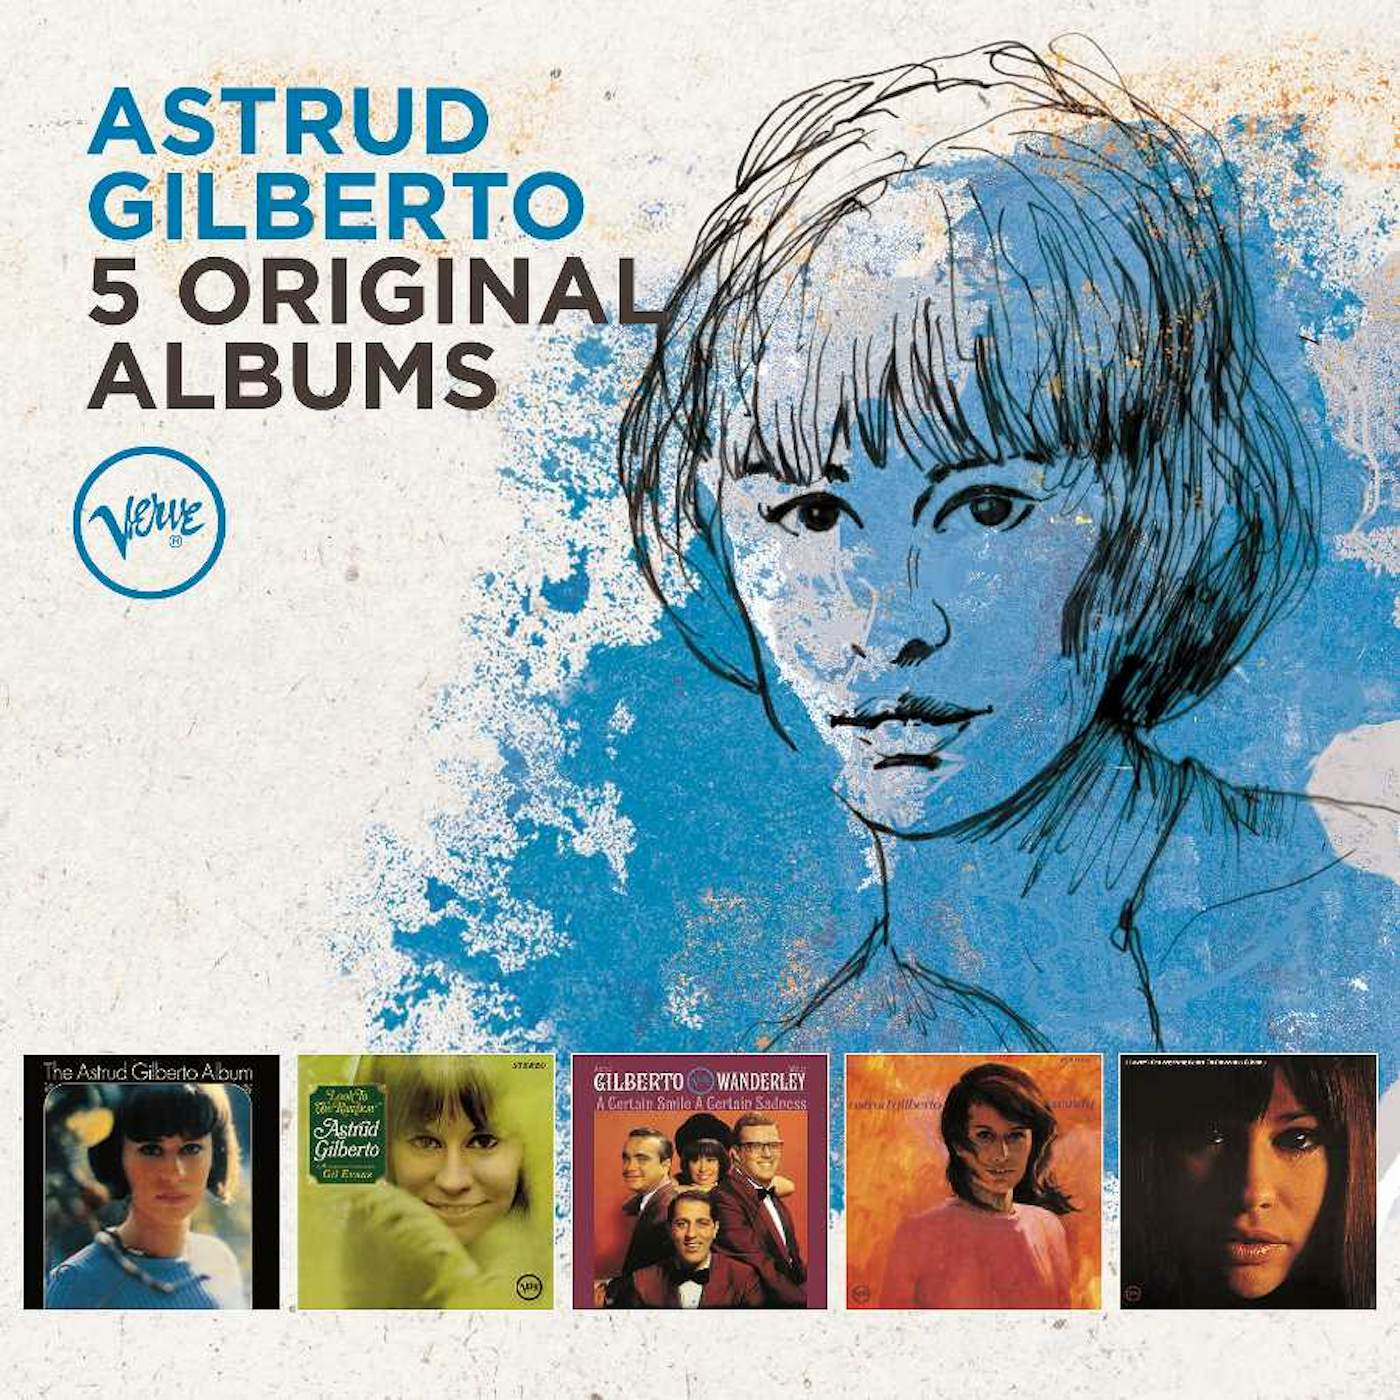 Astrud Gilberto 5 ORIGINAL ALBUMS (5 CD) CD